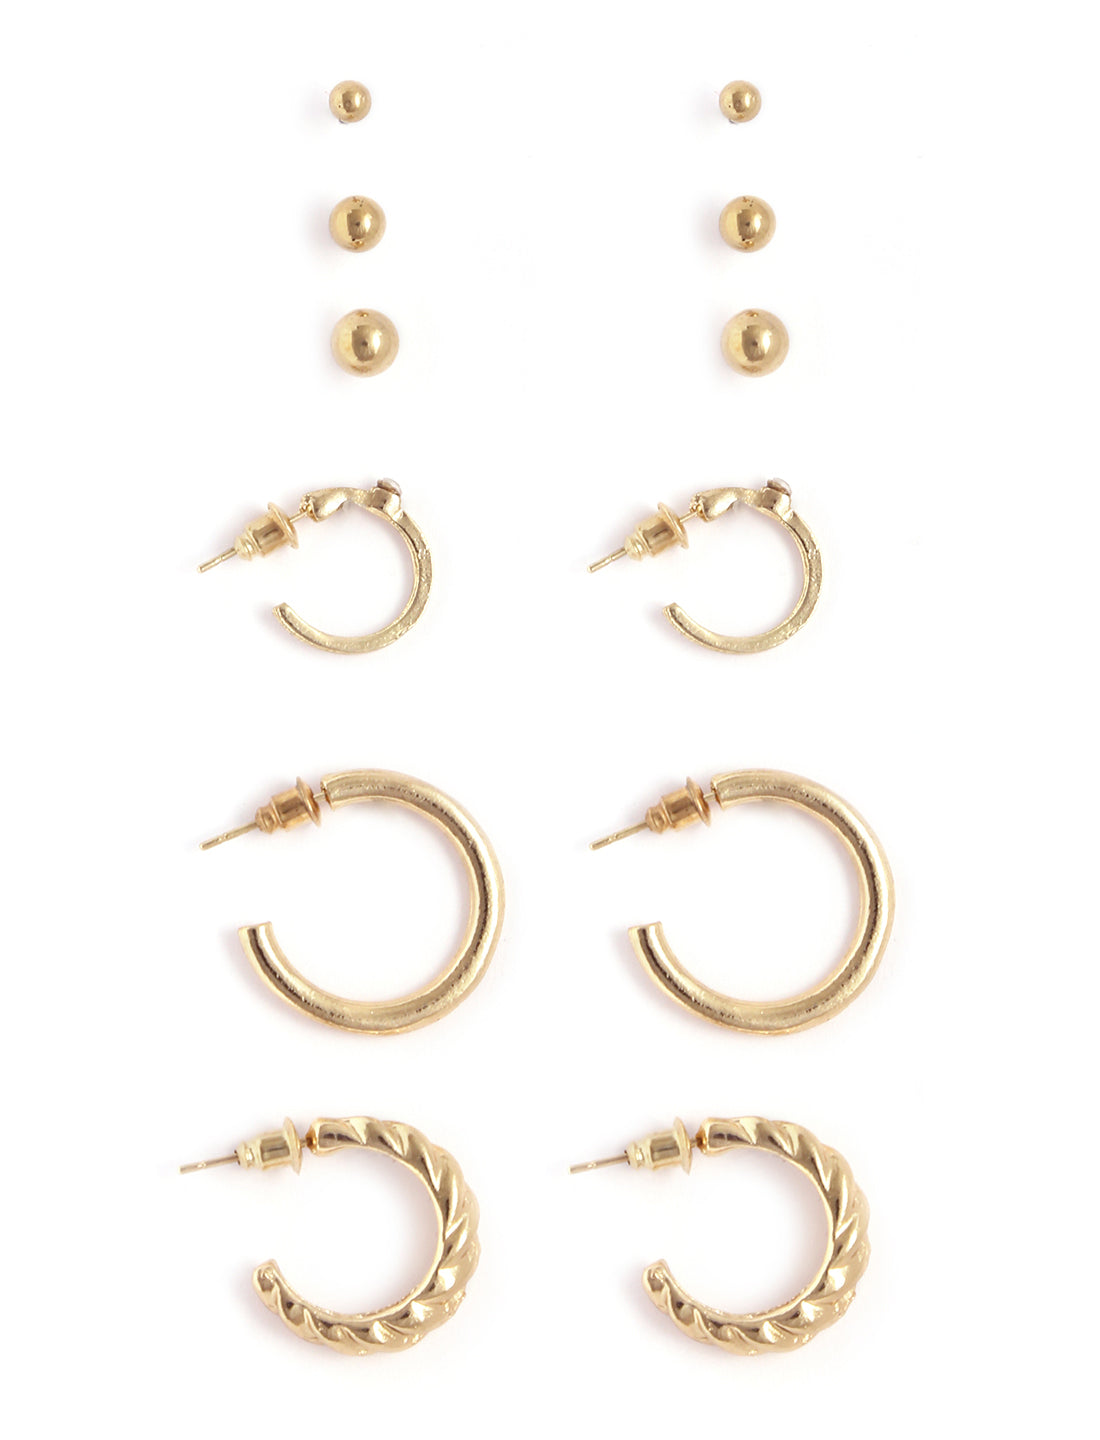 Gold-Plated Alloy Set of 6 Designer Earrings - The Pari